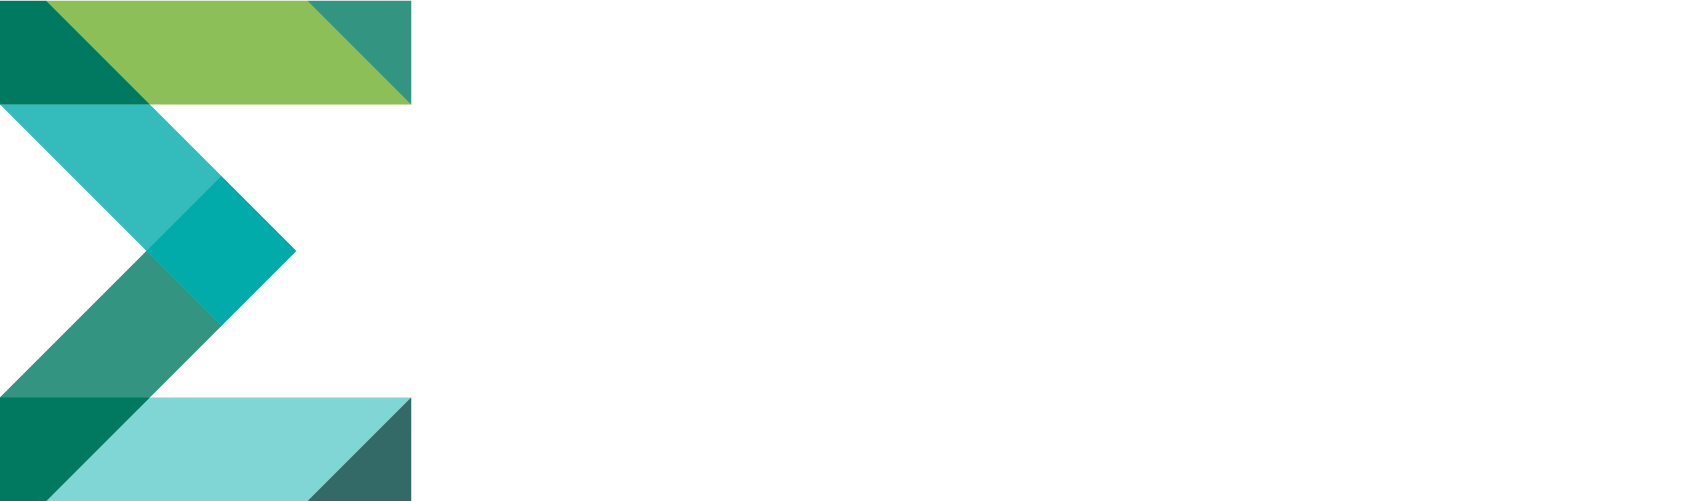 Sigma Trust - Sigma Trust